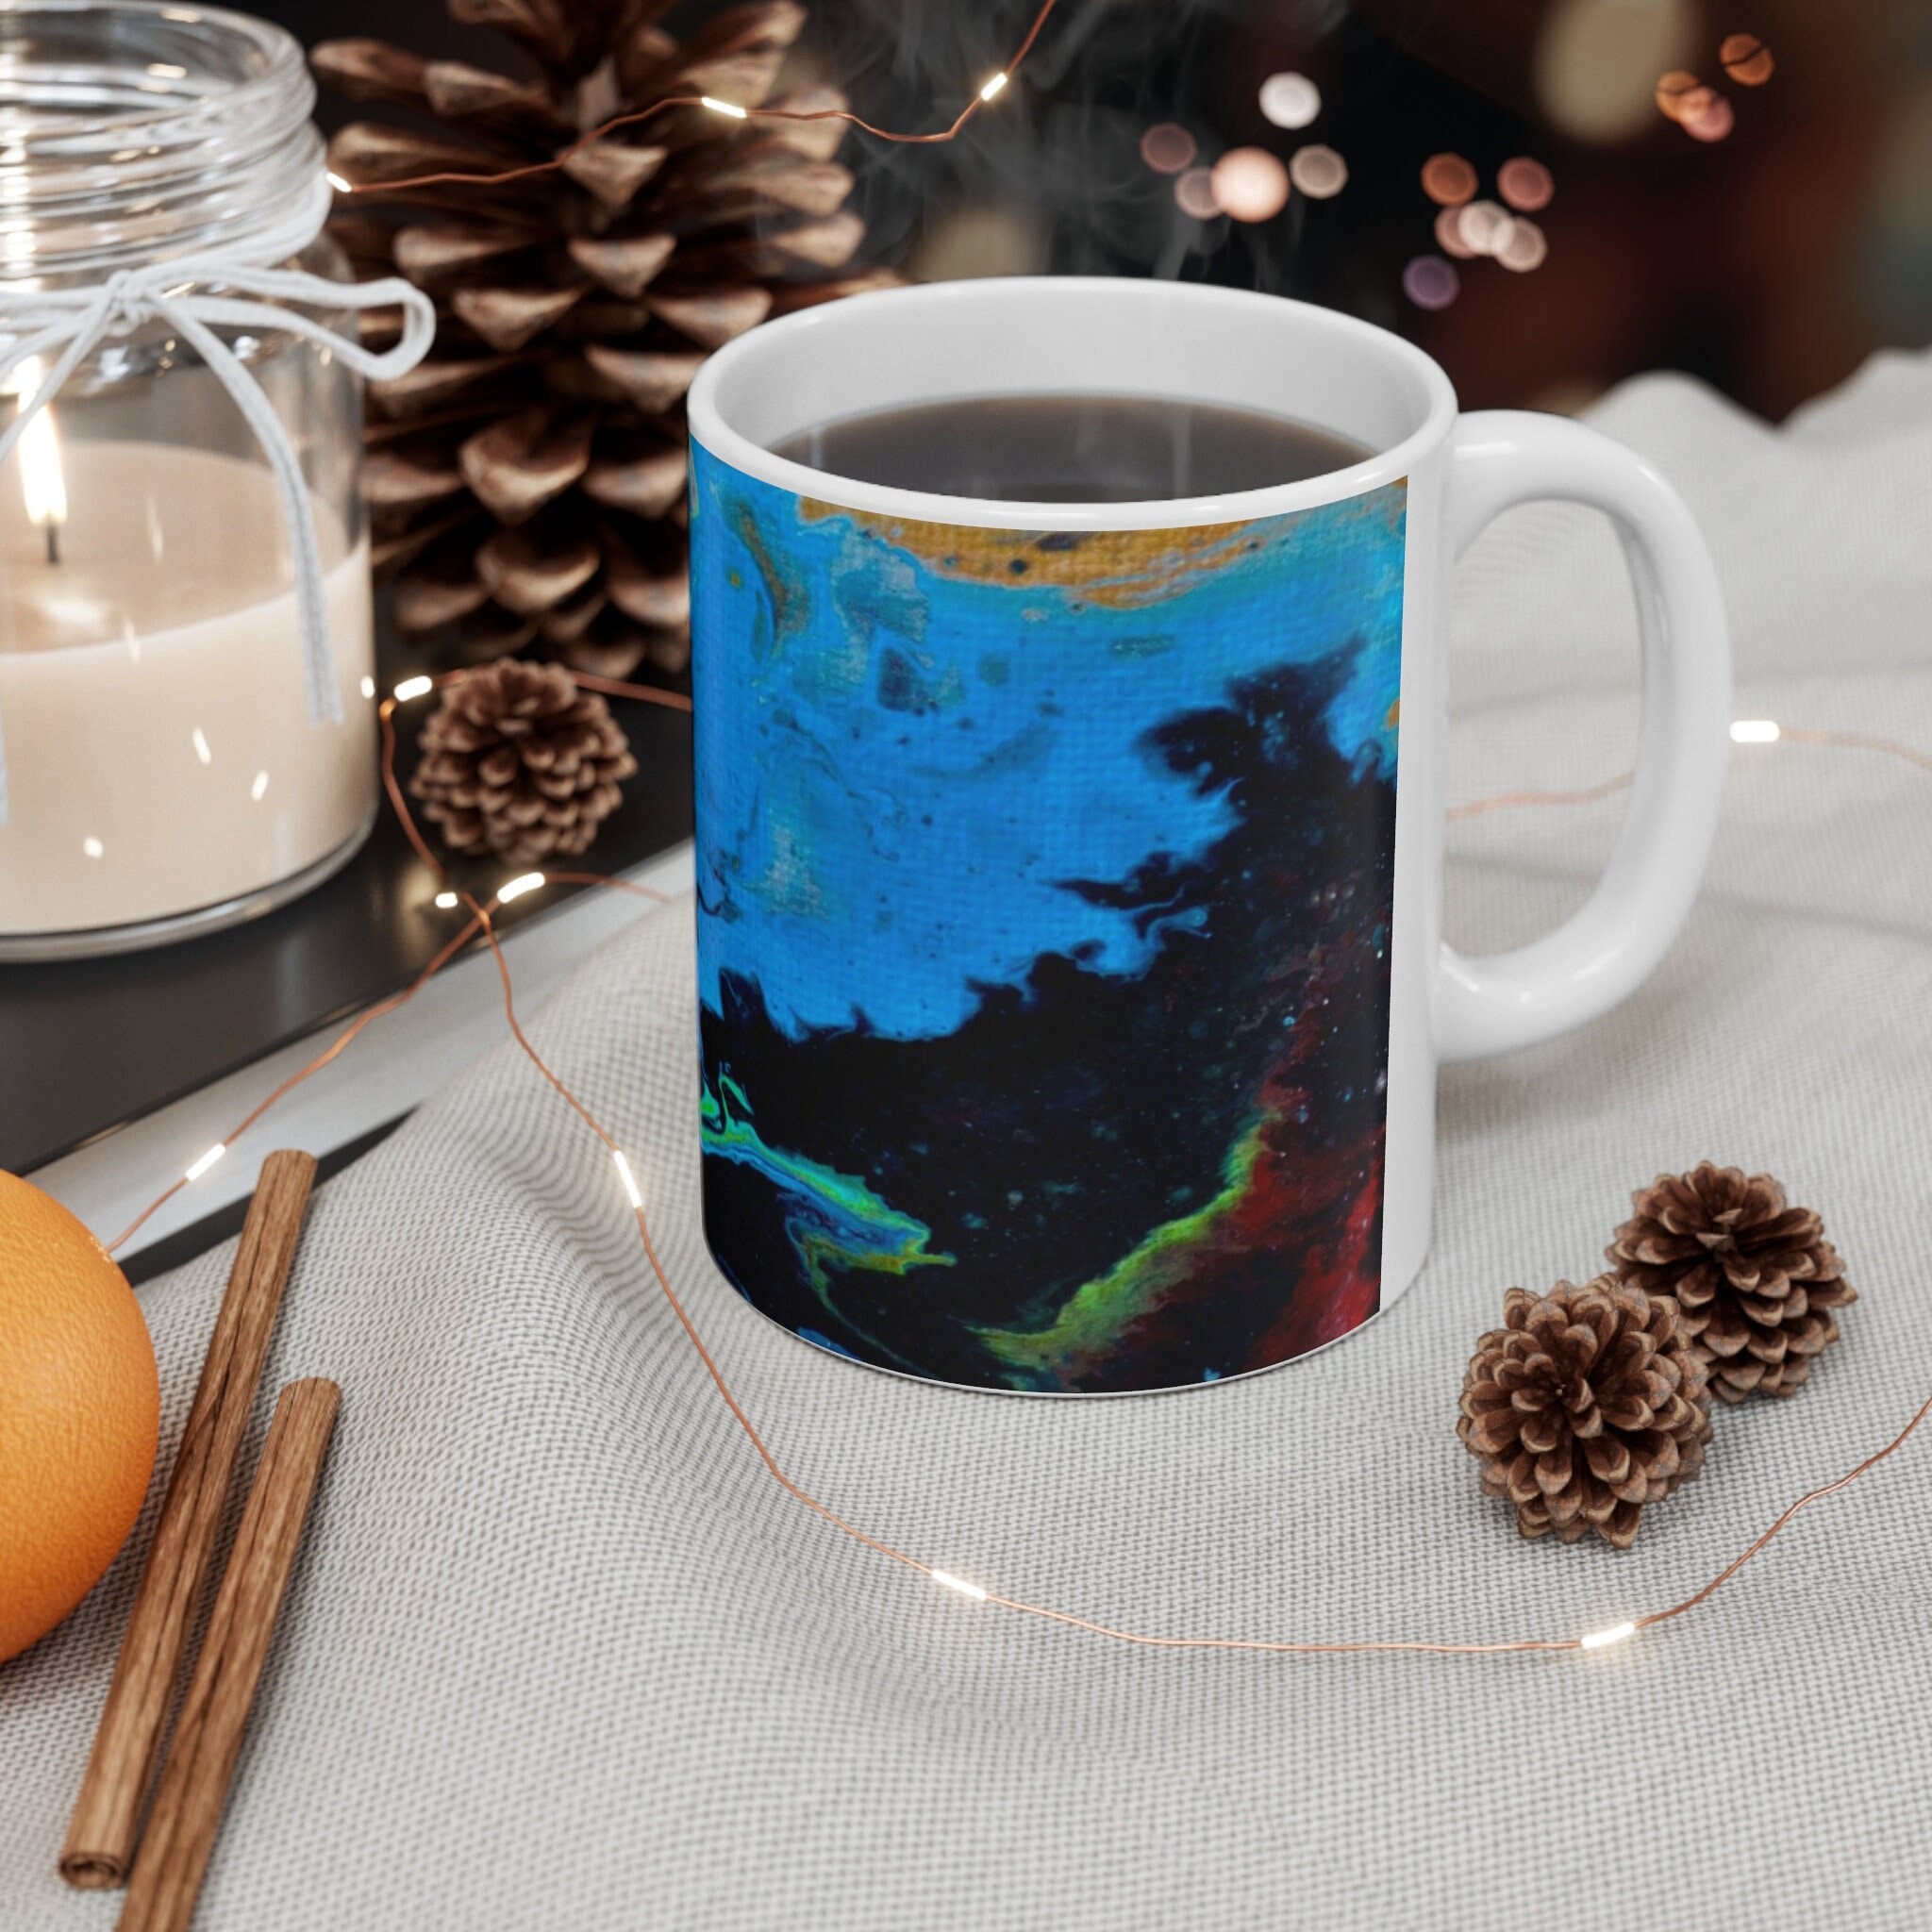 Acrylic Pour Painting- Girly Colors Coffee Mug